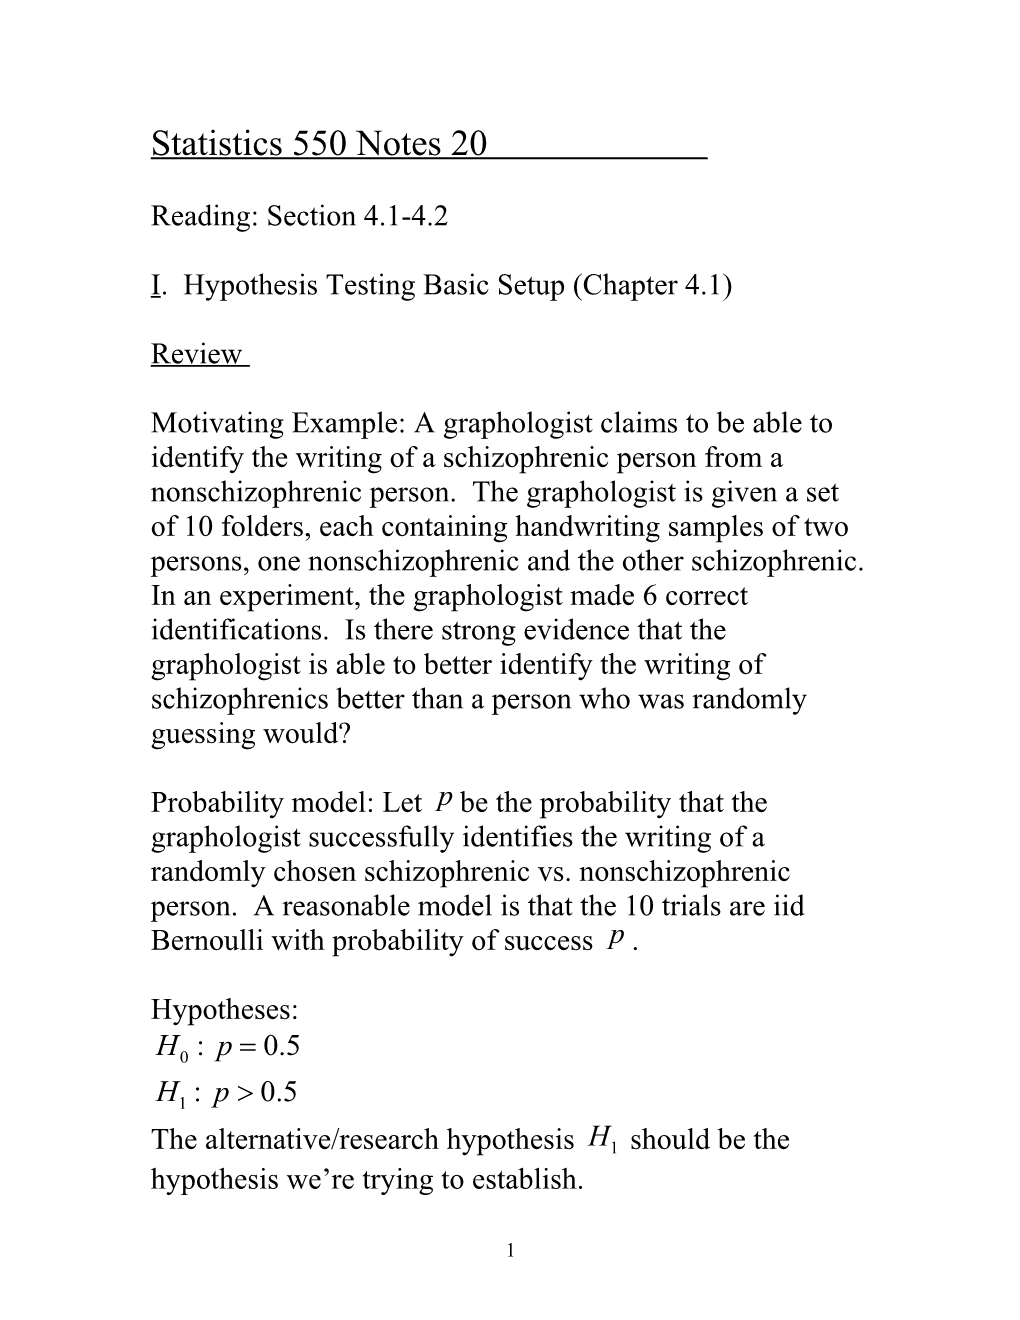 I. Hypothesis Testing Basic Setup (Chapter 4.1)